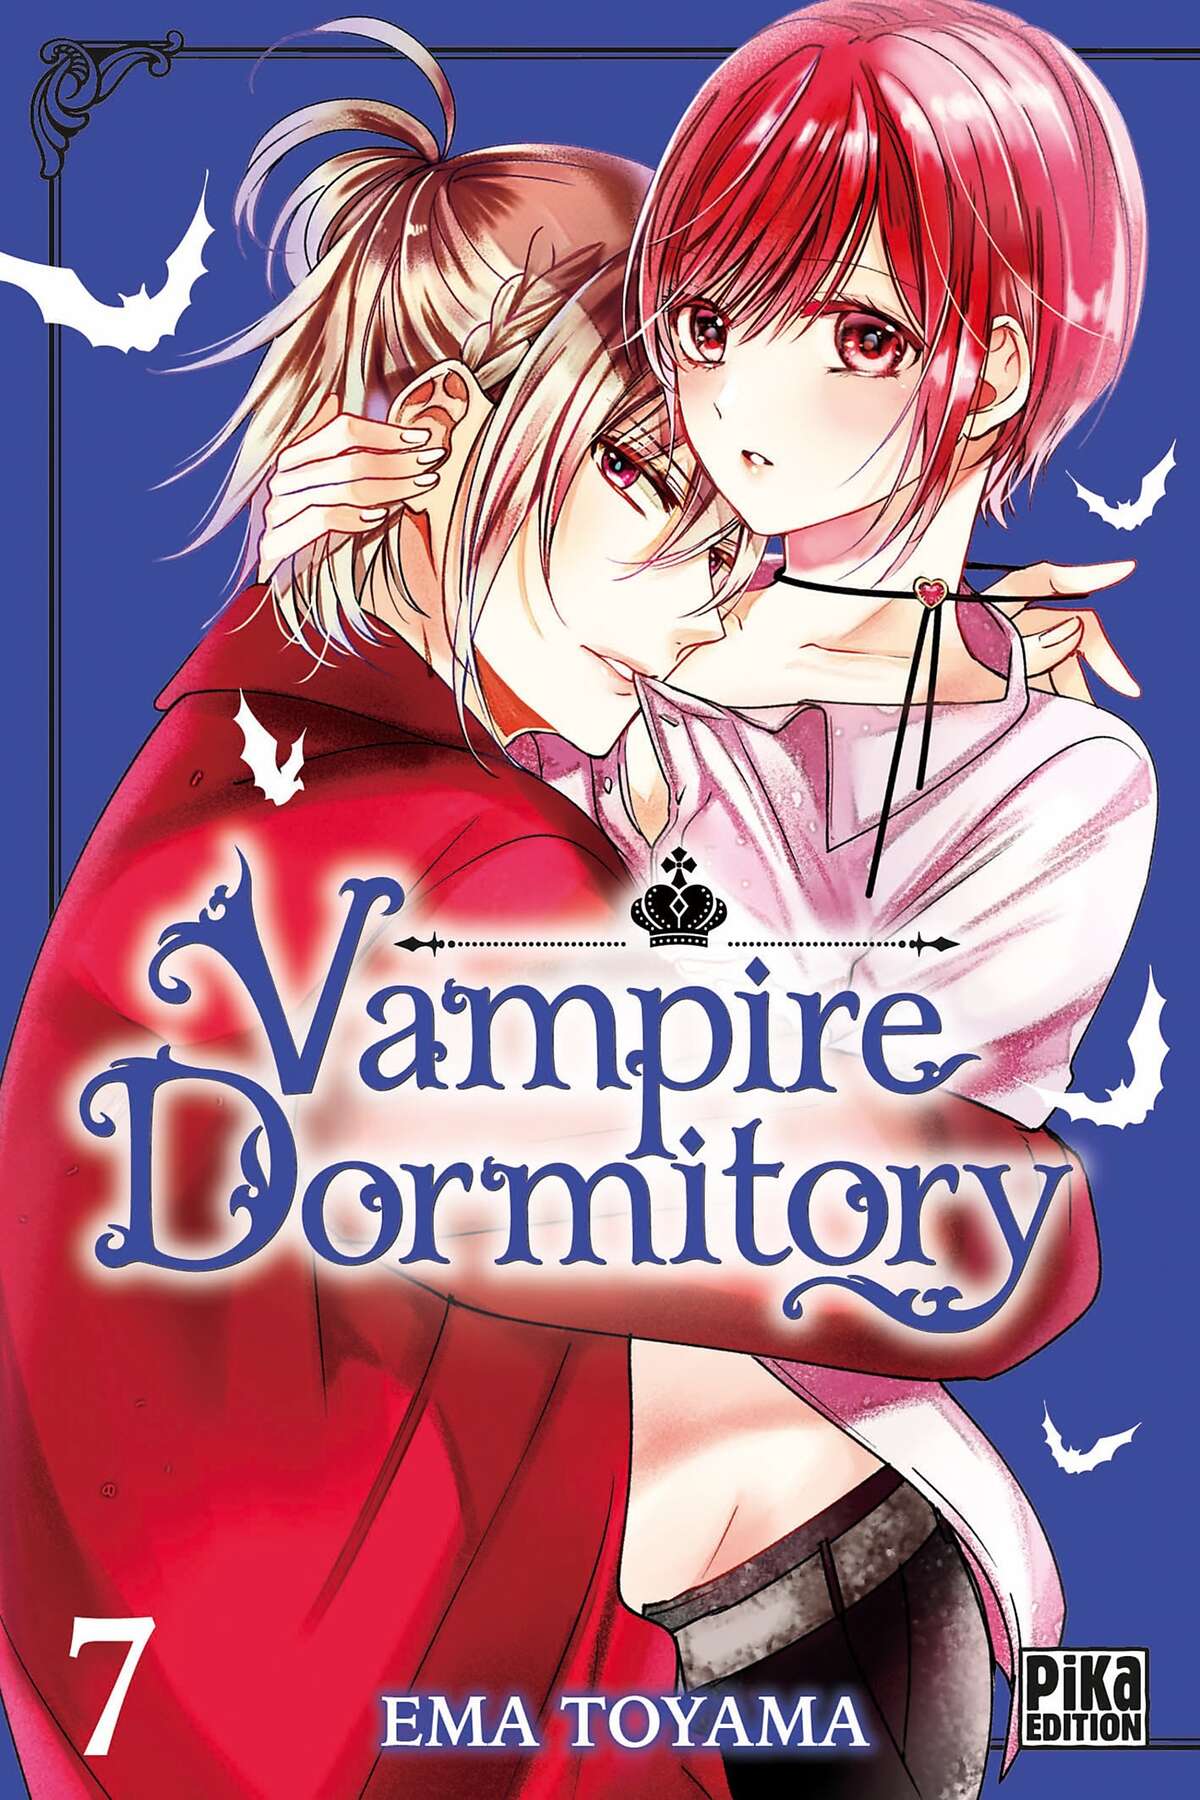 Vampire Dormitory Volume 7 page 1